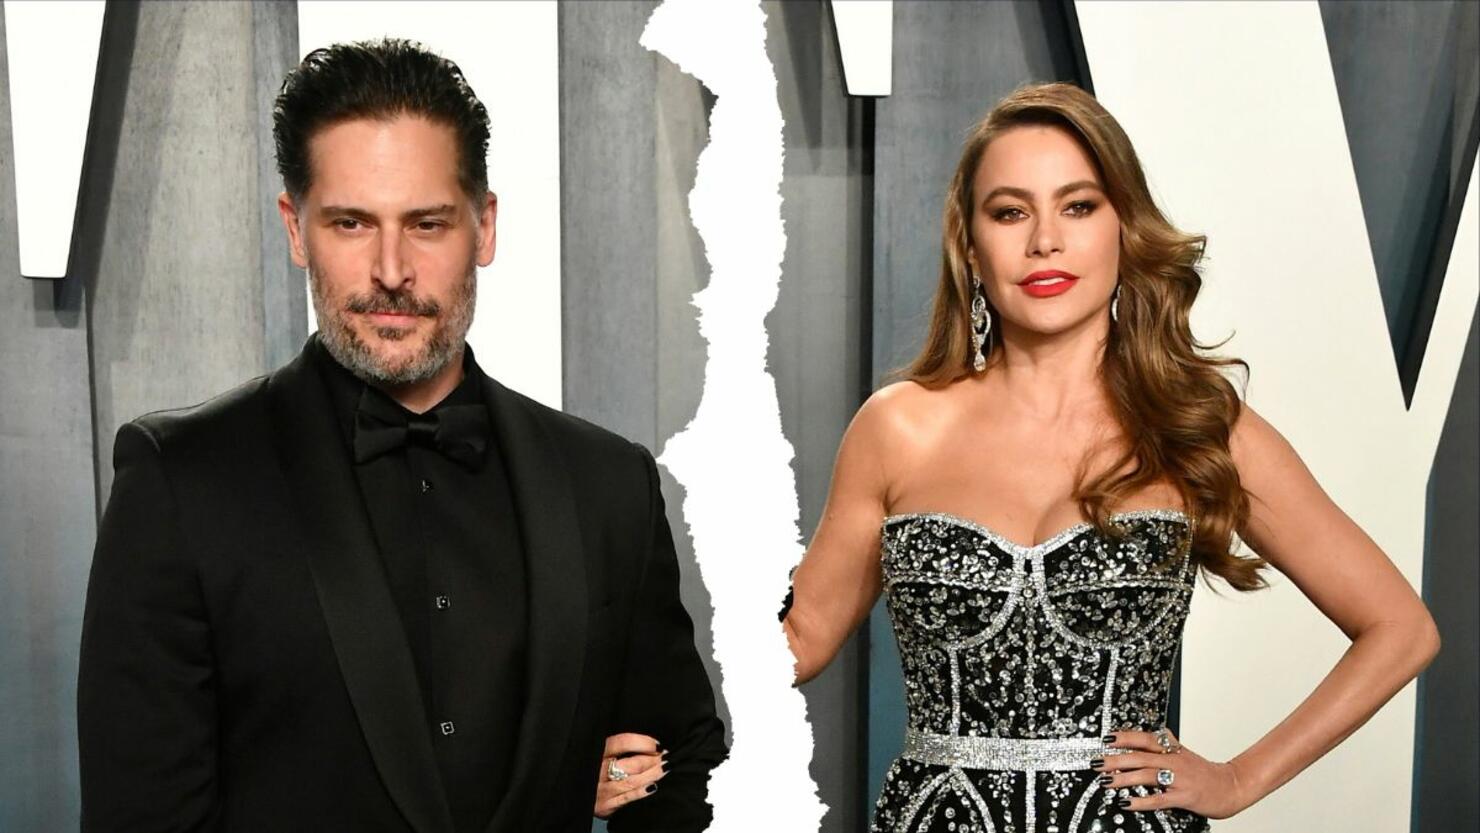 Sofía Vergara & Joe Manganiello Announce Divorce After 7 Years Together